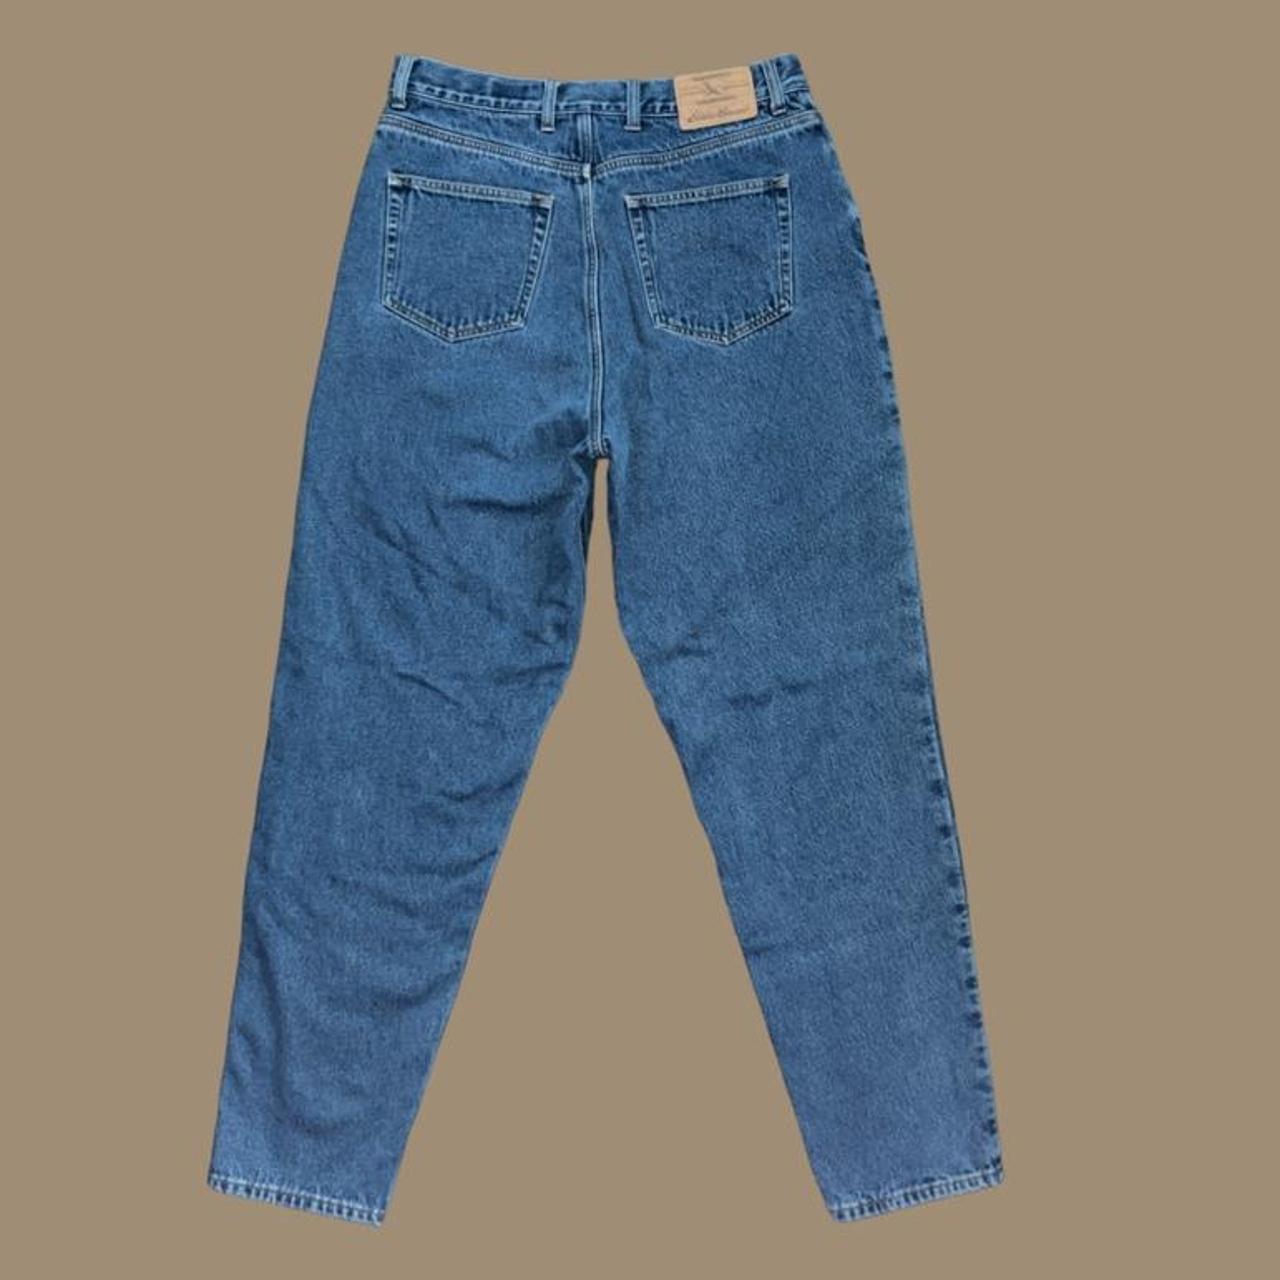 Eddie Bauer Women's Blue and Brown Jeans (3)